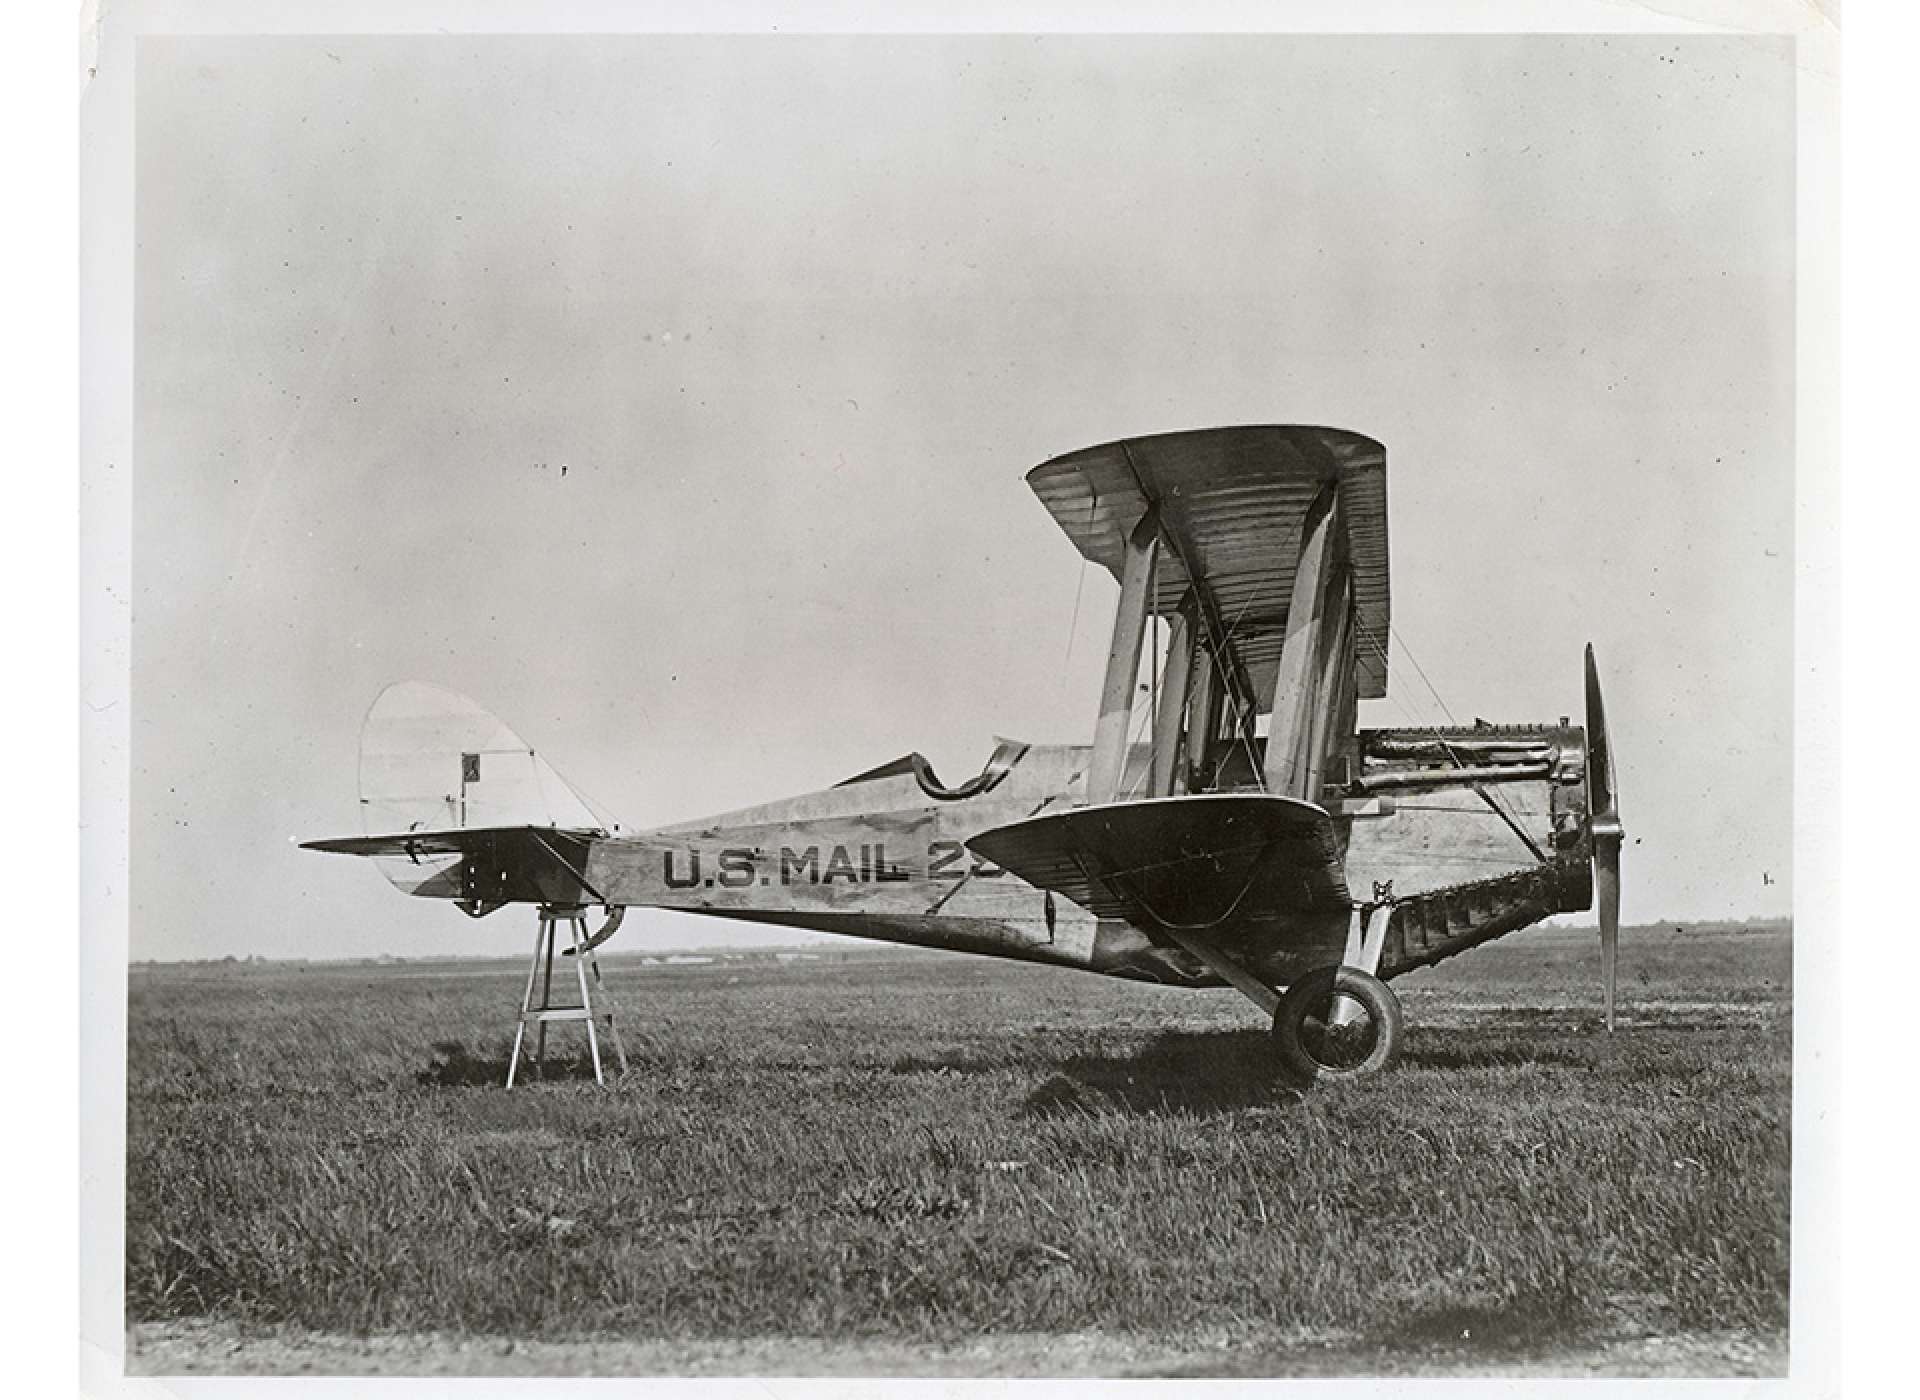 De Havilland biplane